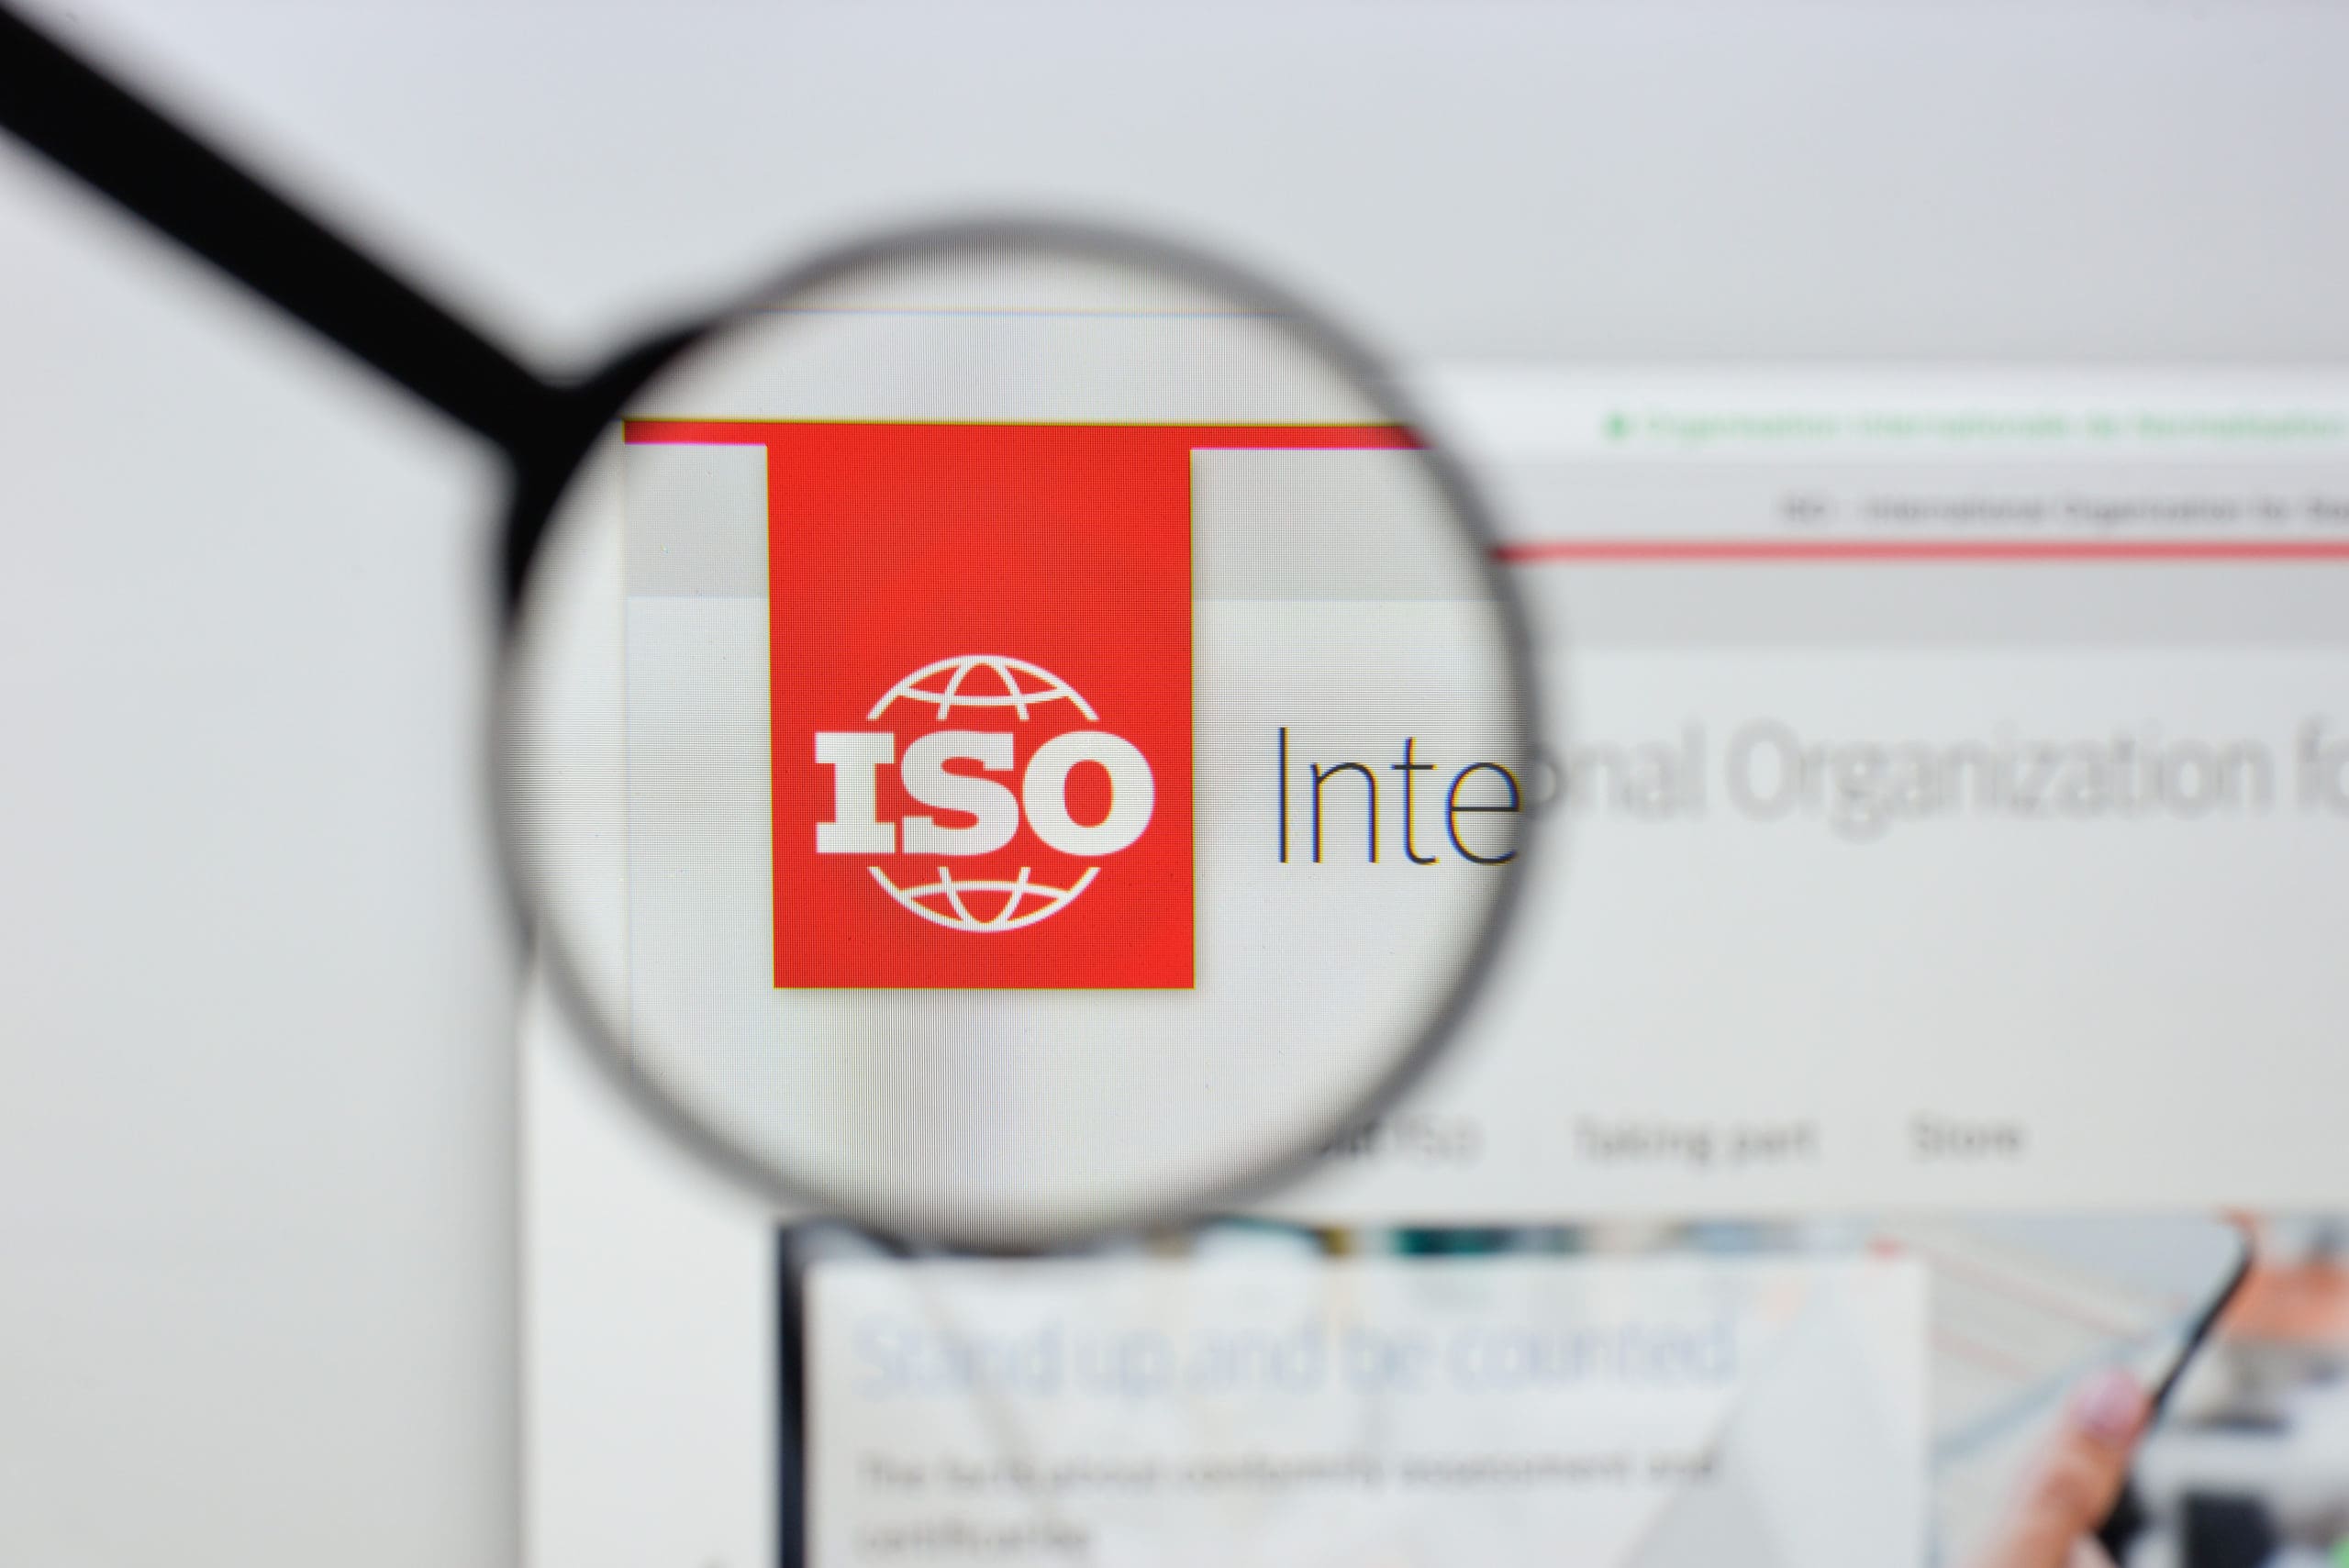 ISO - International Organization for Standardization website homepage. ISO - International Organization for Standardization logo visible